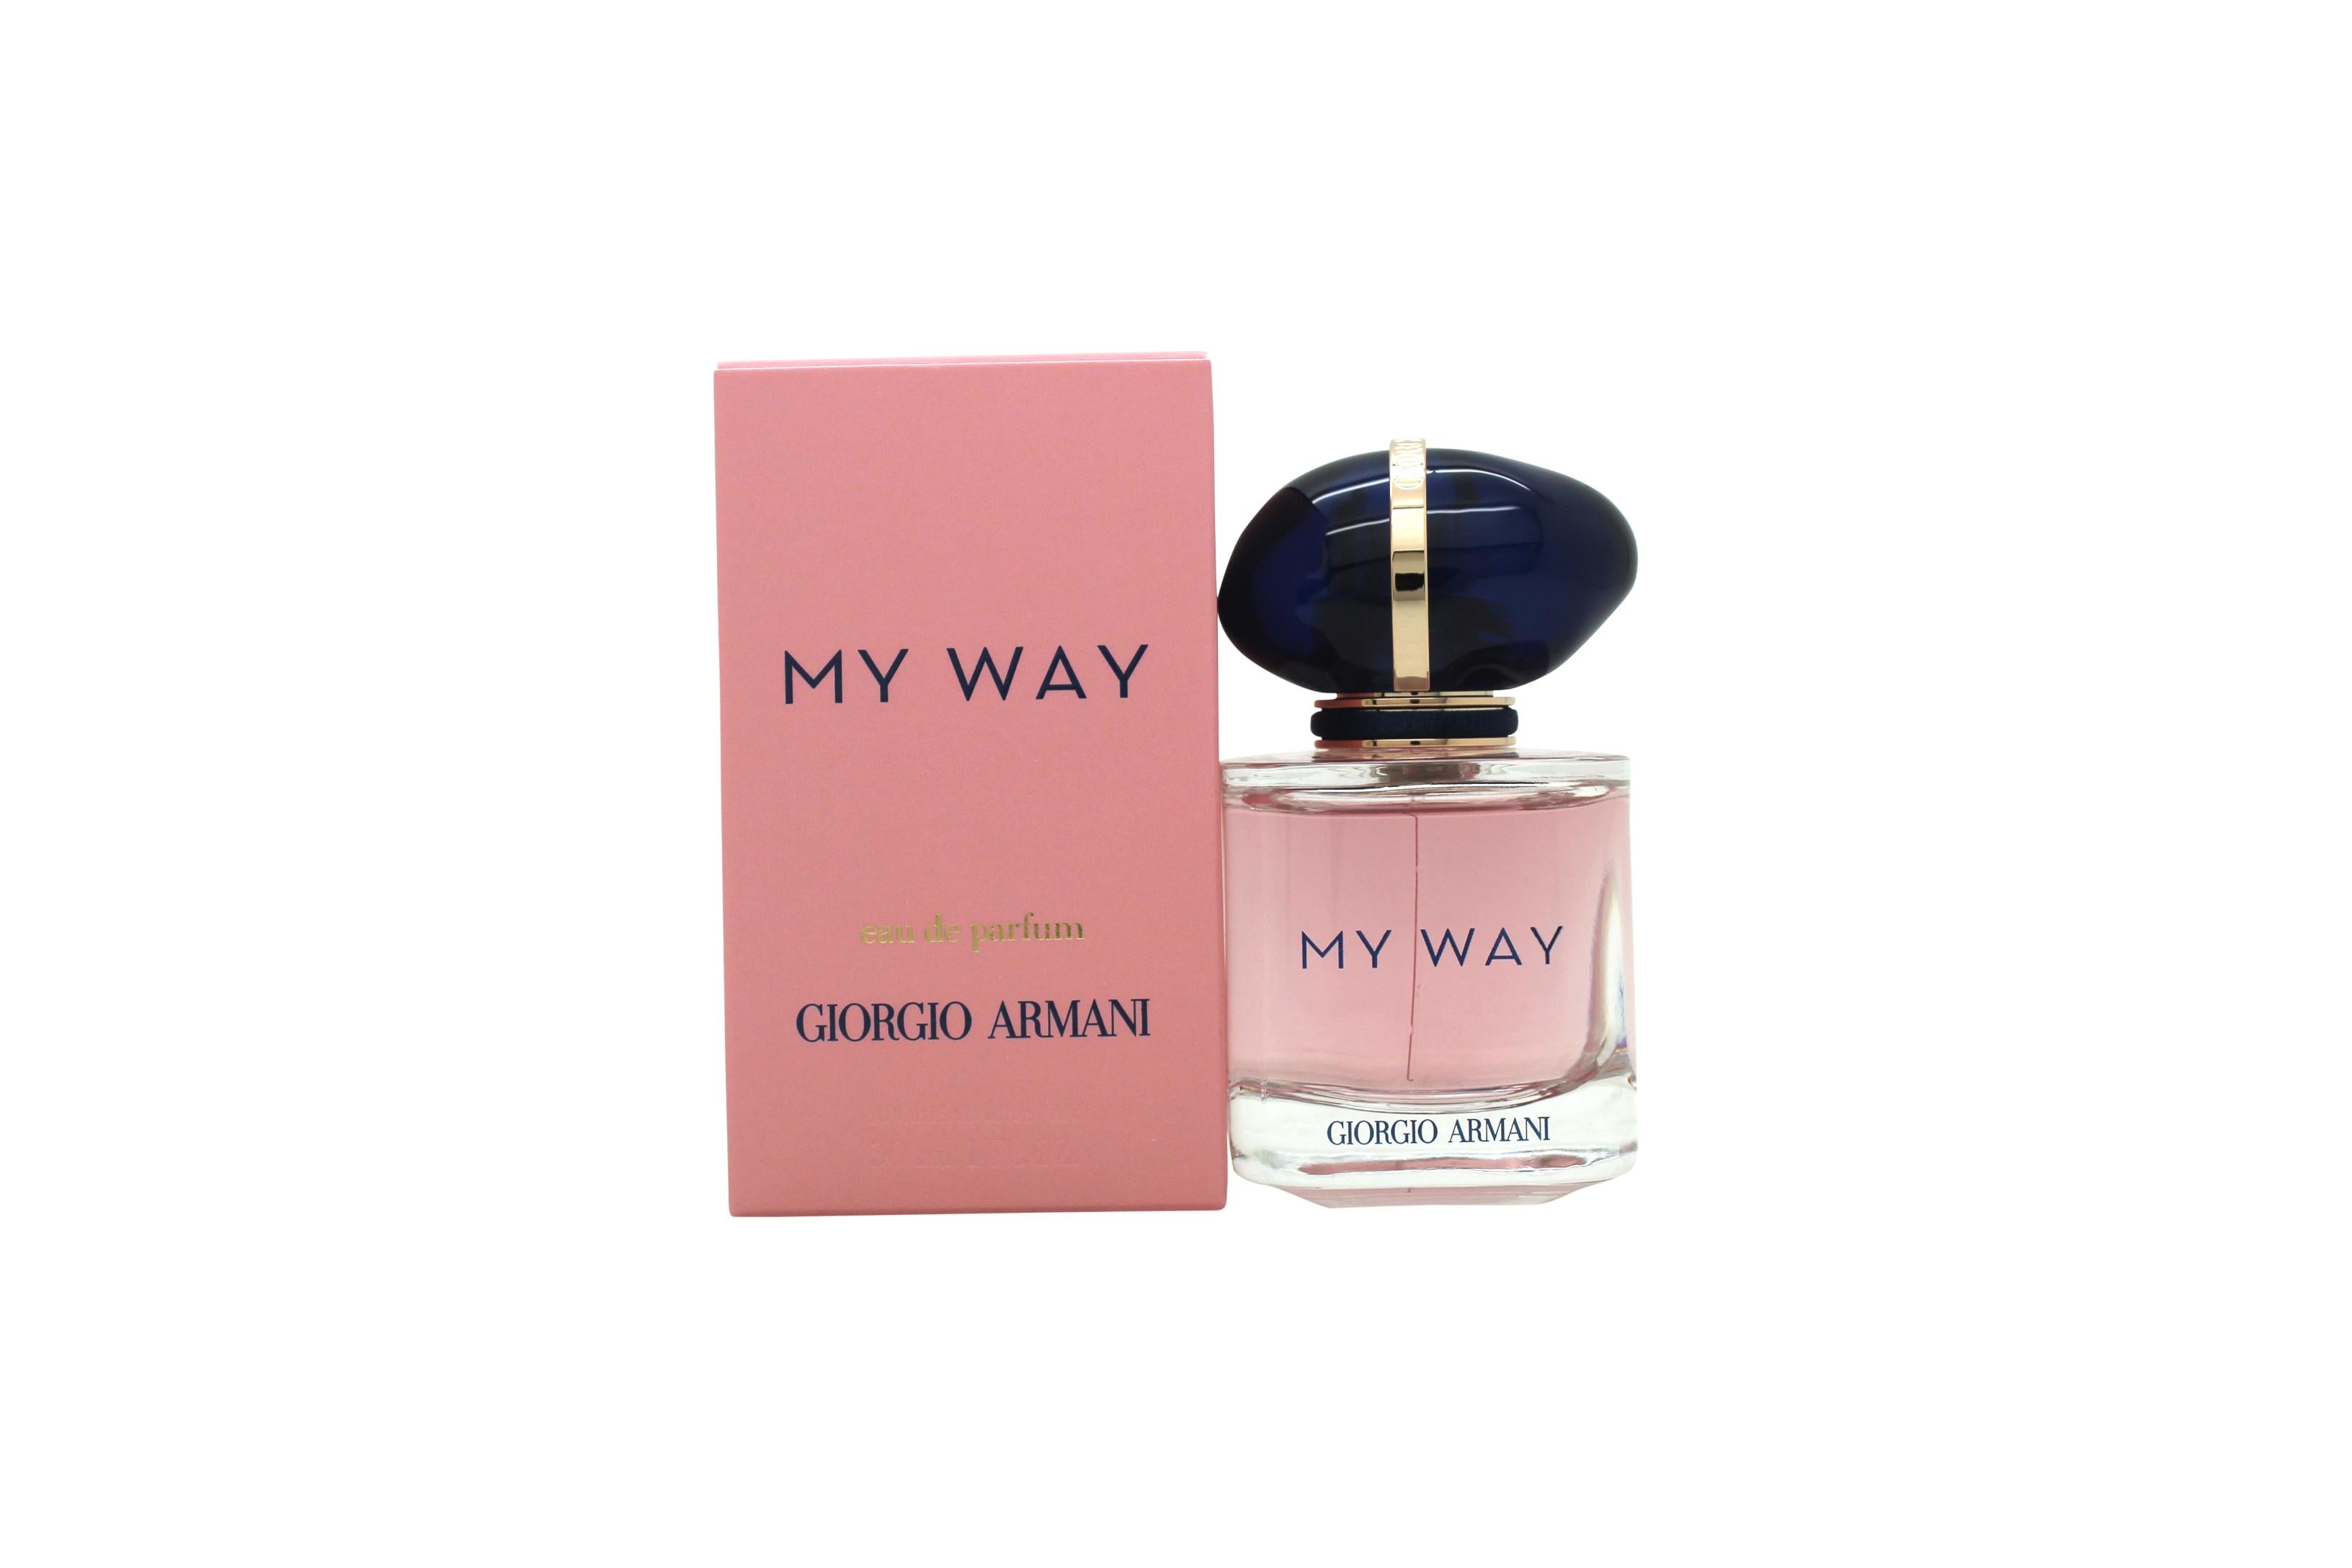 View Giorgio Armani My Way Eau de Parfum 30ml Spray information